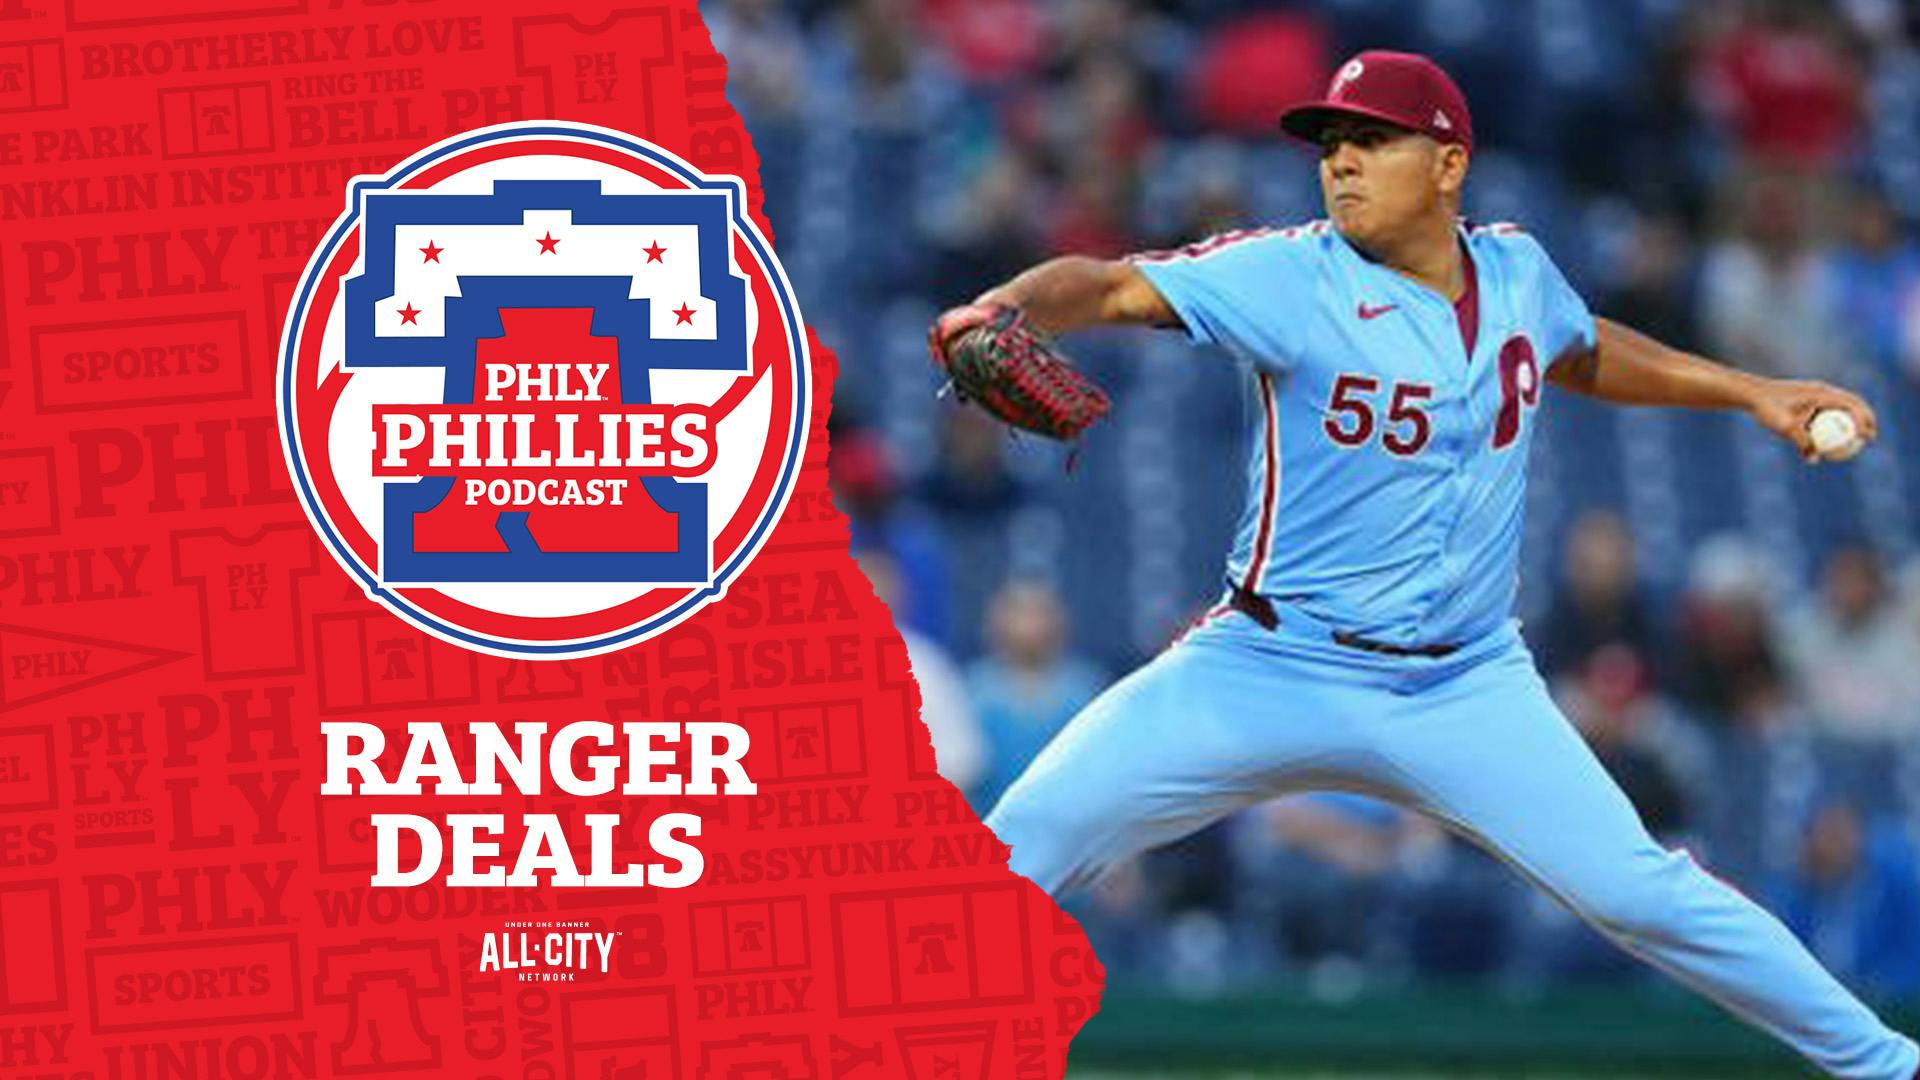 PHLY Phillies Podcast | Ranger Suarez throws 6 shutout innings, Marsh, Bohm homer, as Phillies beat Pirates in series opener